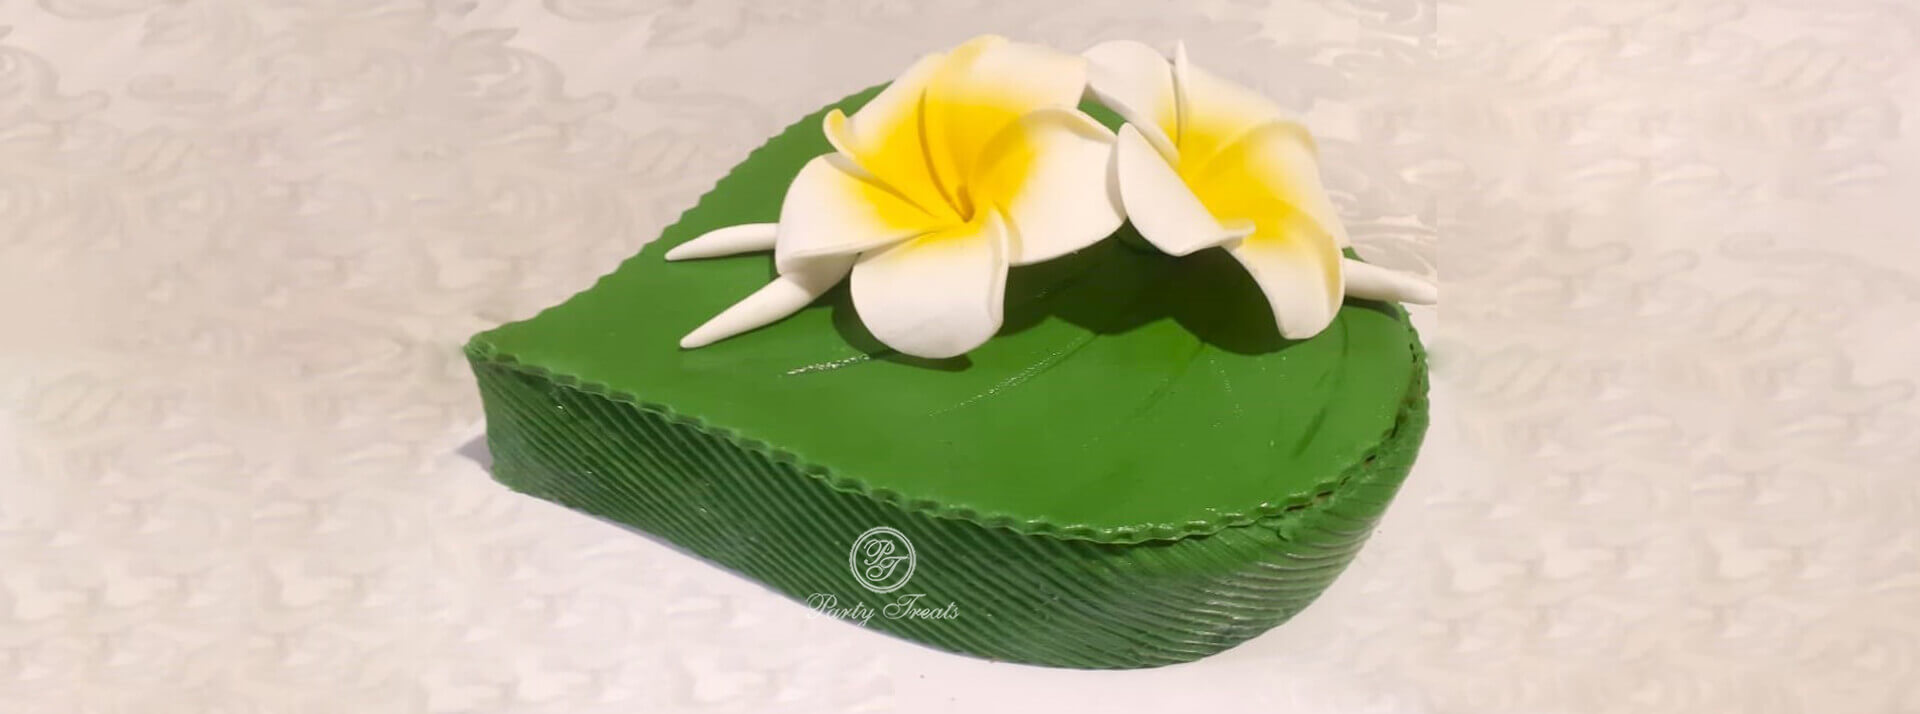 rich cakes and love cakes Sri Lanka